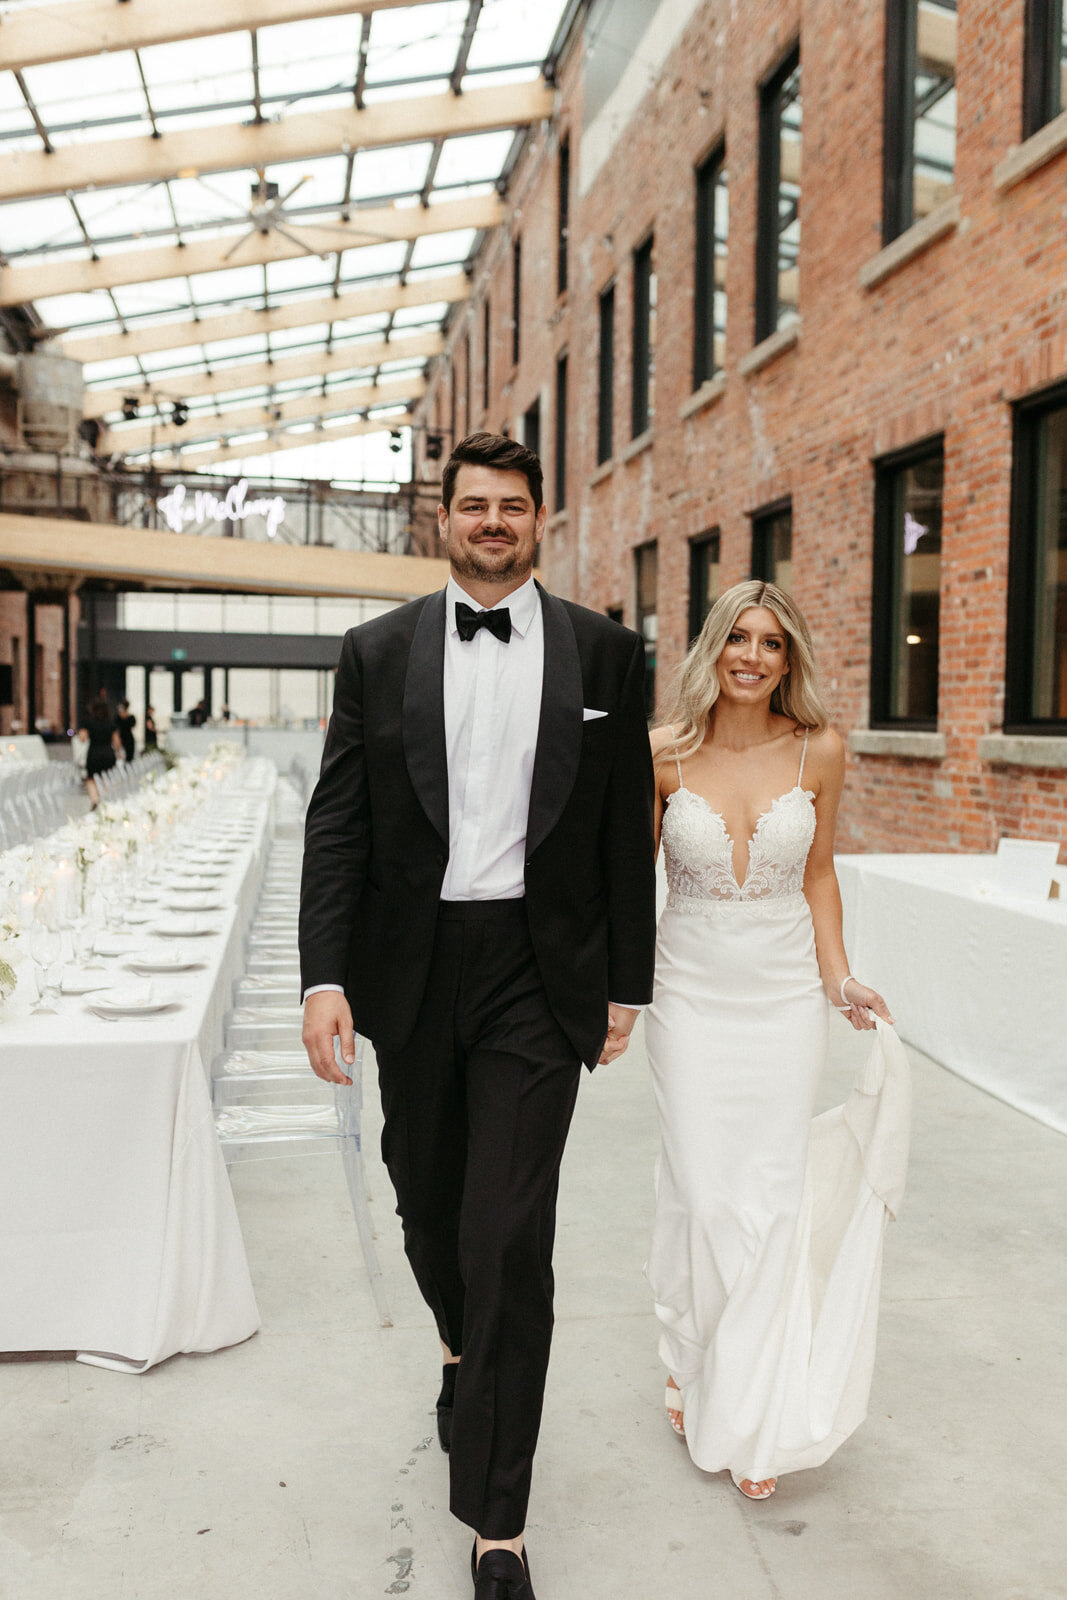 Elegant indoor industrial brick wall wedding party photo